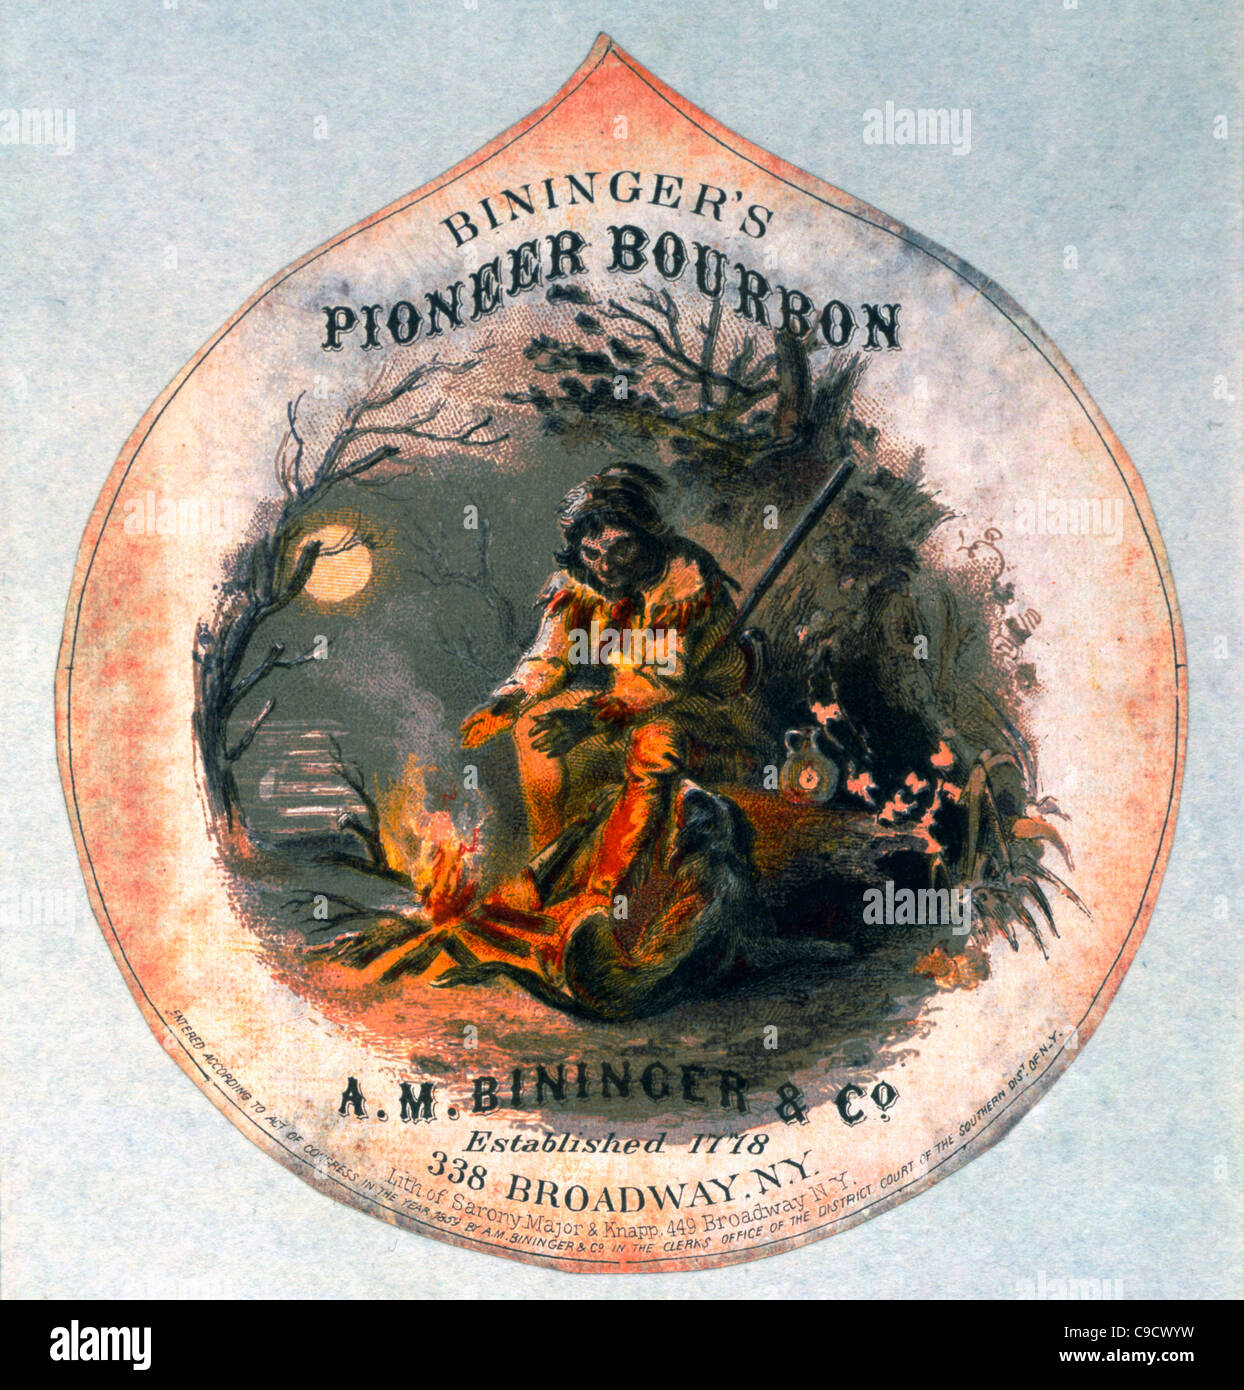 Bininger's Pioneer Borbone, A.M. Bininger & Company, Bourbon Advertising etichetta, circa 1859 Foto Stock